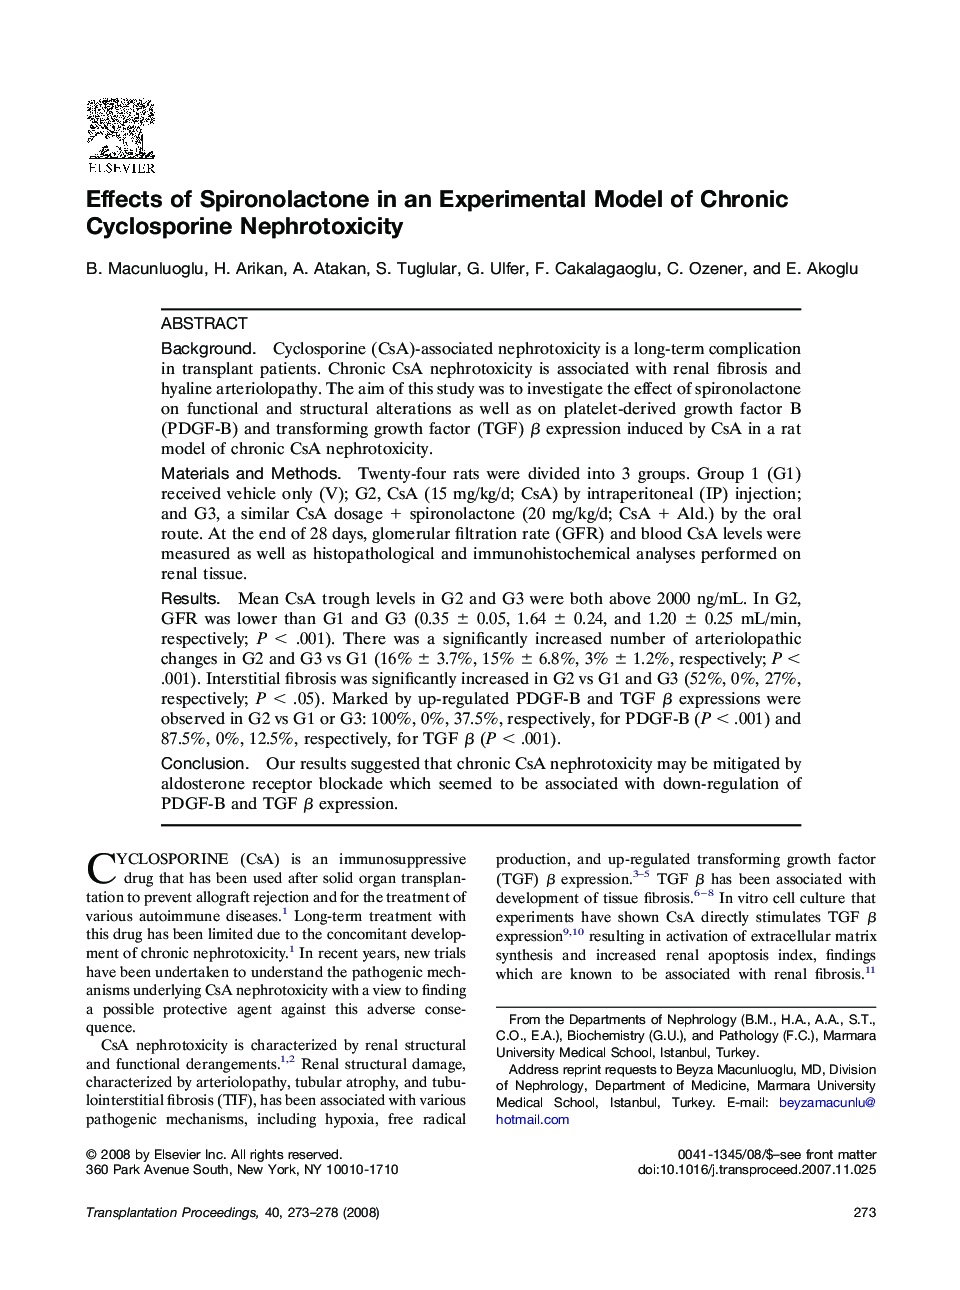 Effects of Spironolactone in an Experimental Model of Chronic Cyclosporine Nephrotoxicity